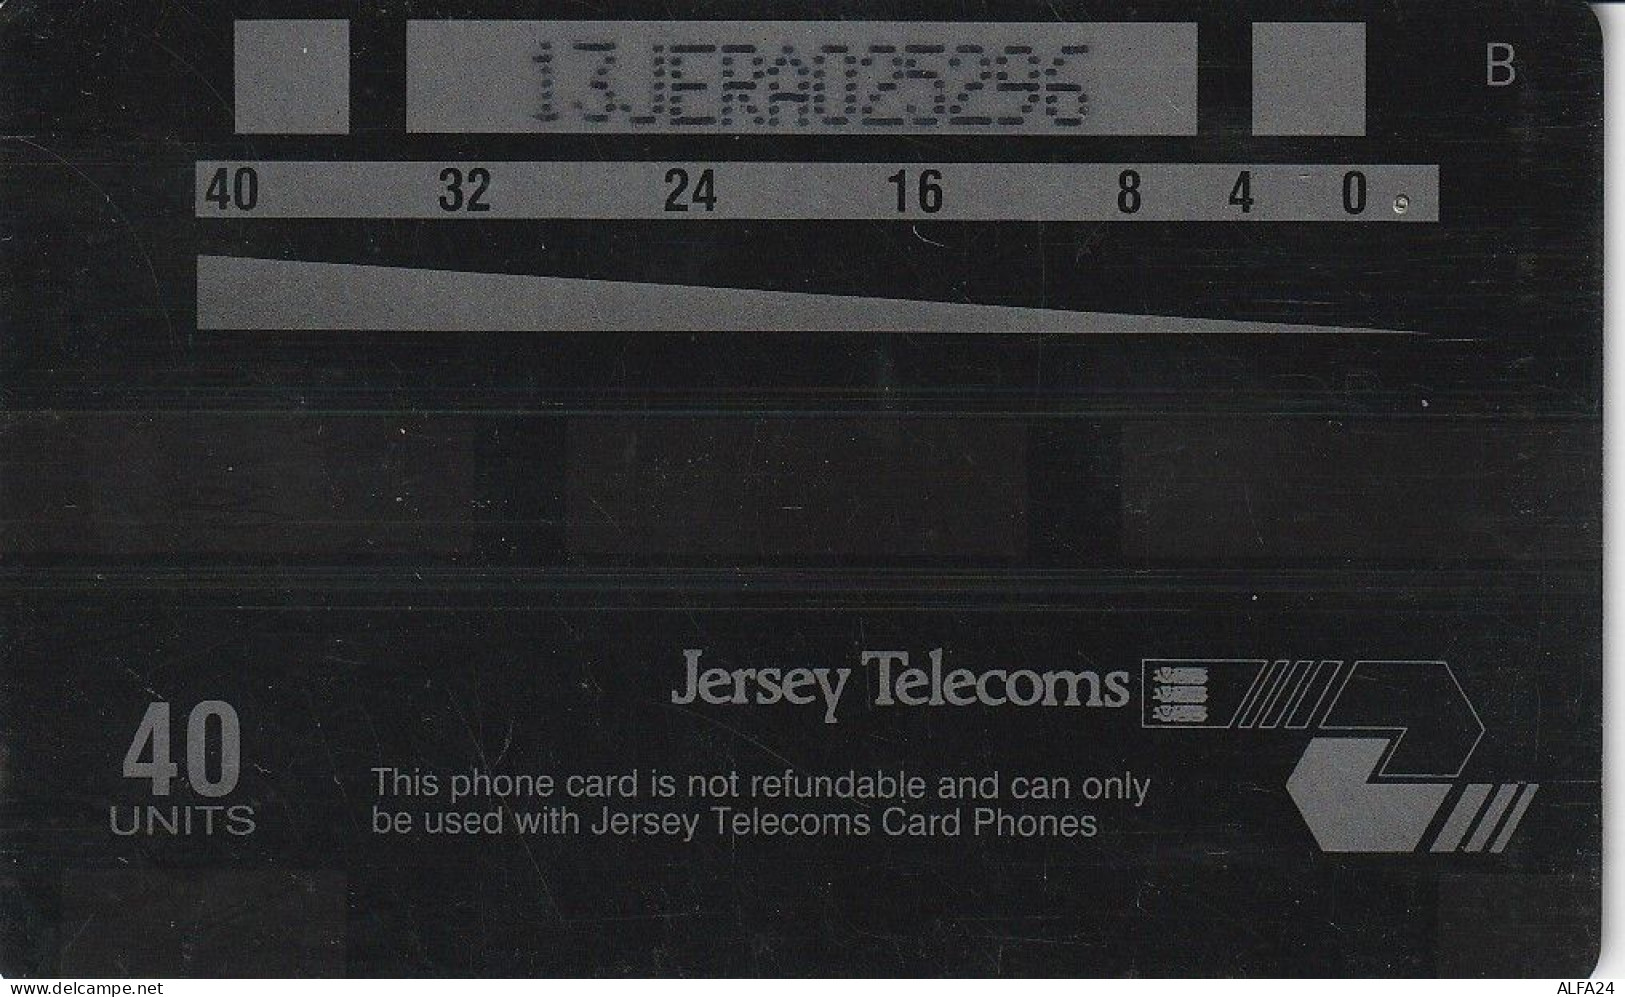 PHONE CARD JERSEY  (CZ1122 - [ 7] Jersey Y Guernsey